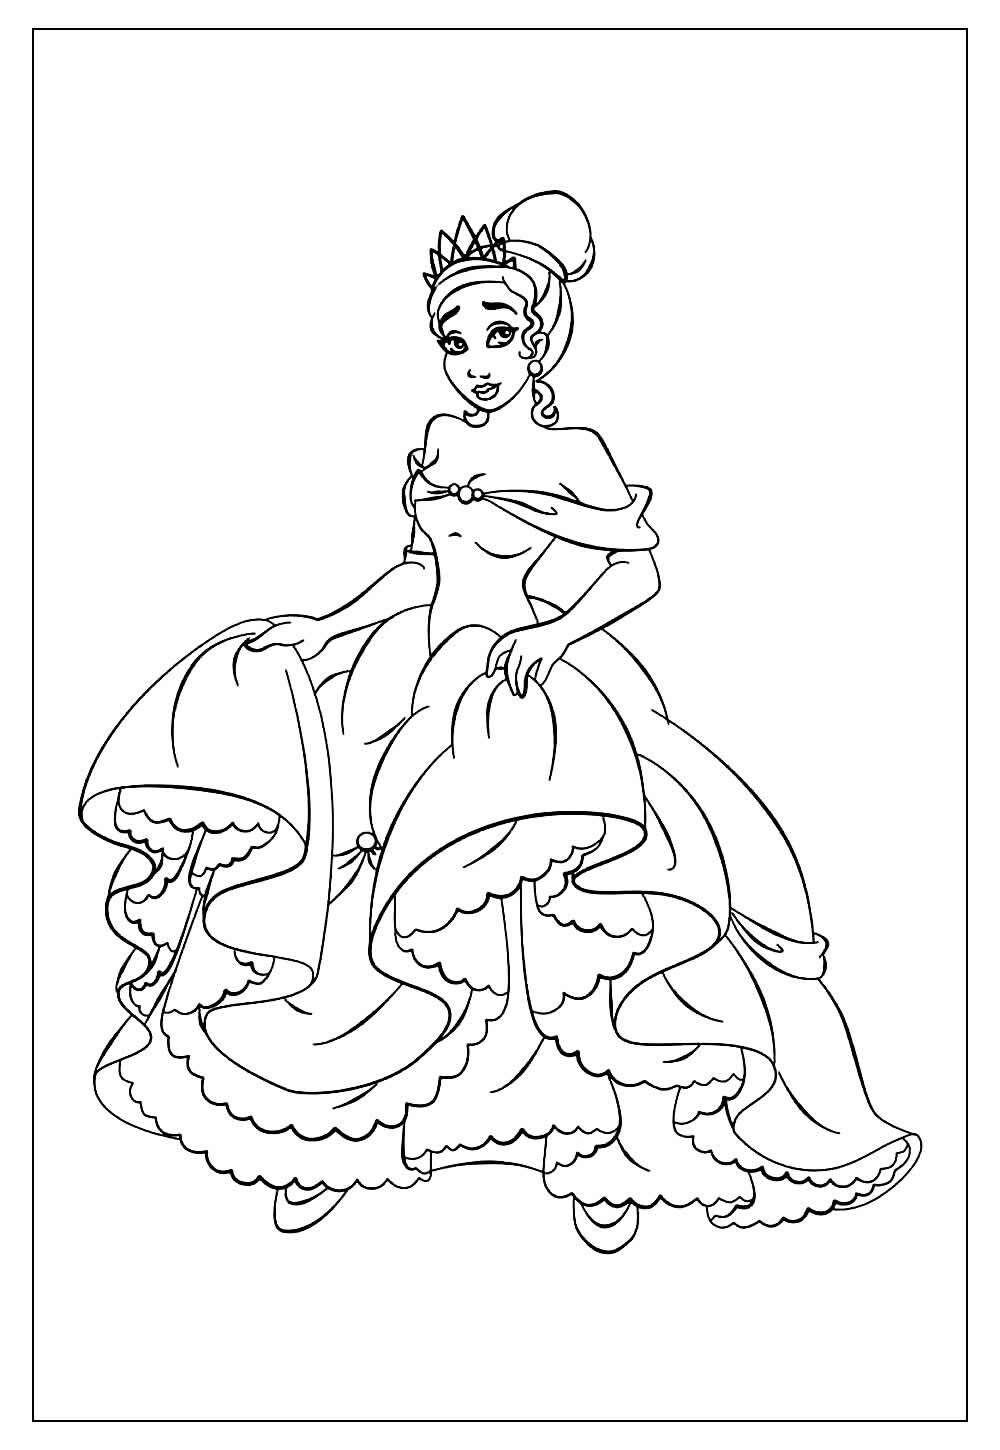 Desenhos para colorir de a princesa e o sapo para colorir -pt